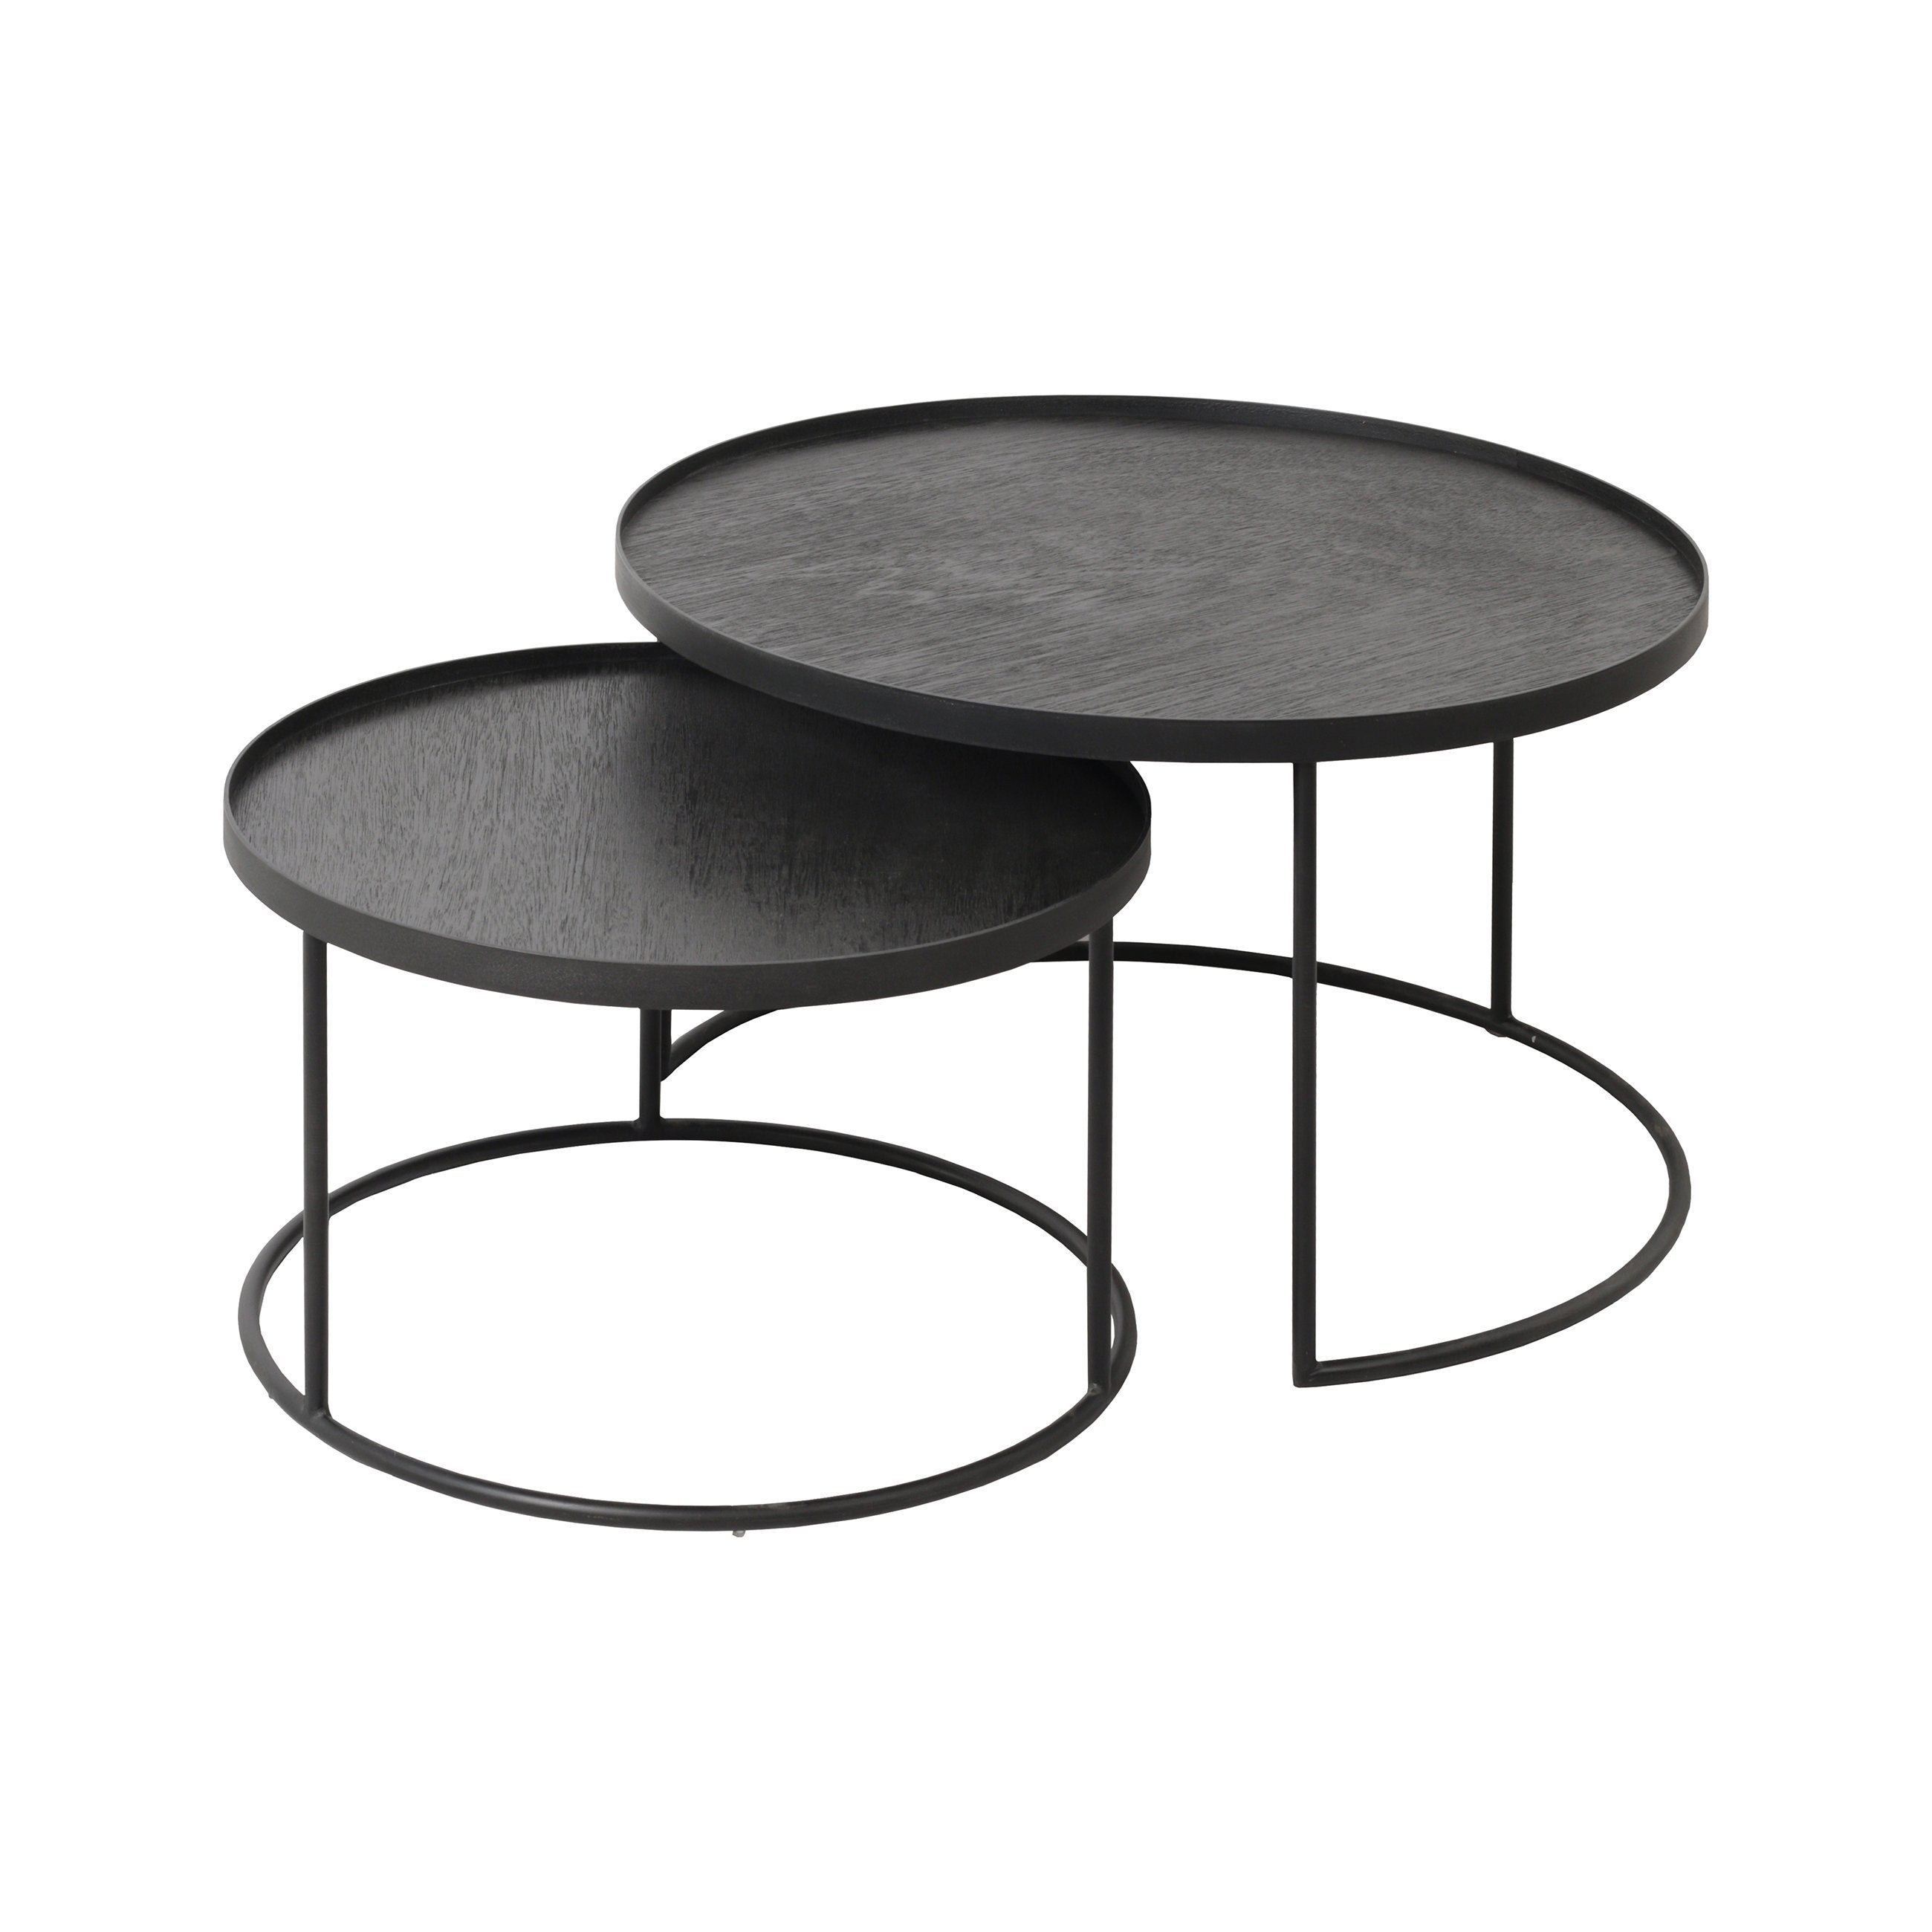 Round Coffee Table Trays. Столик формой с